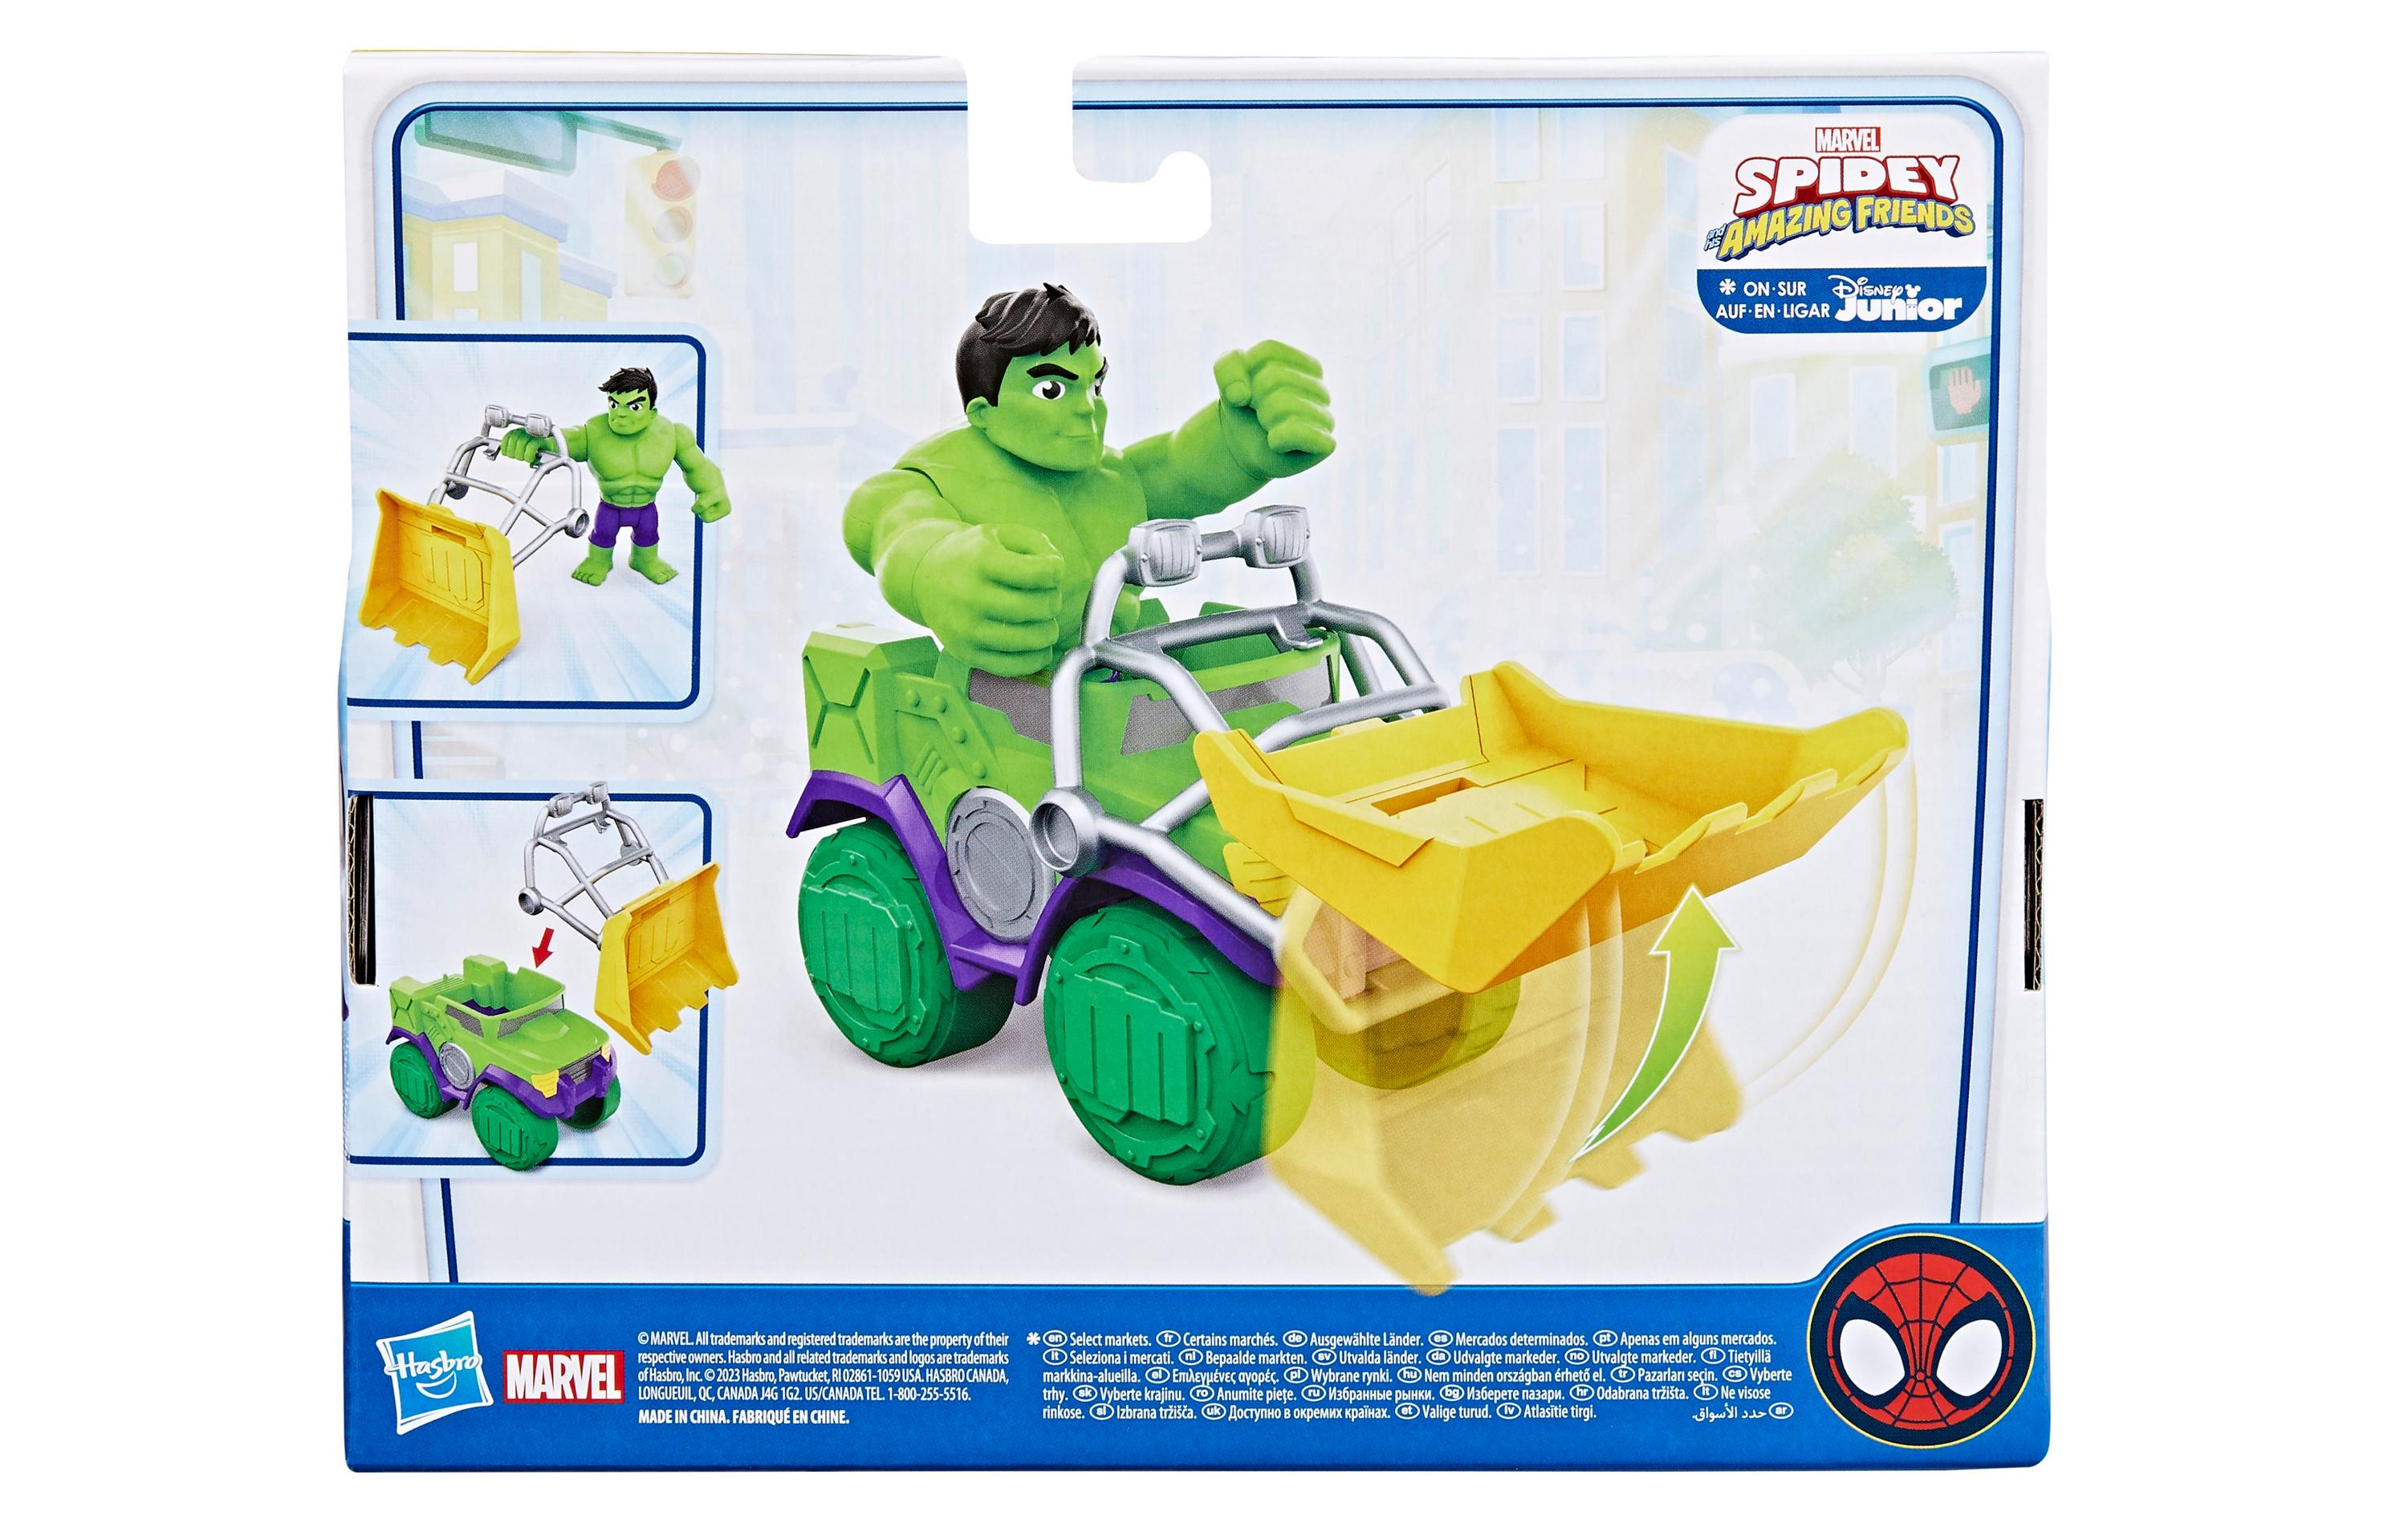 Hasbro Marvel Spidey and His Amazing Friends Hulk Smash Truck